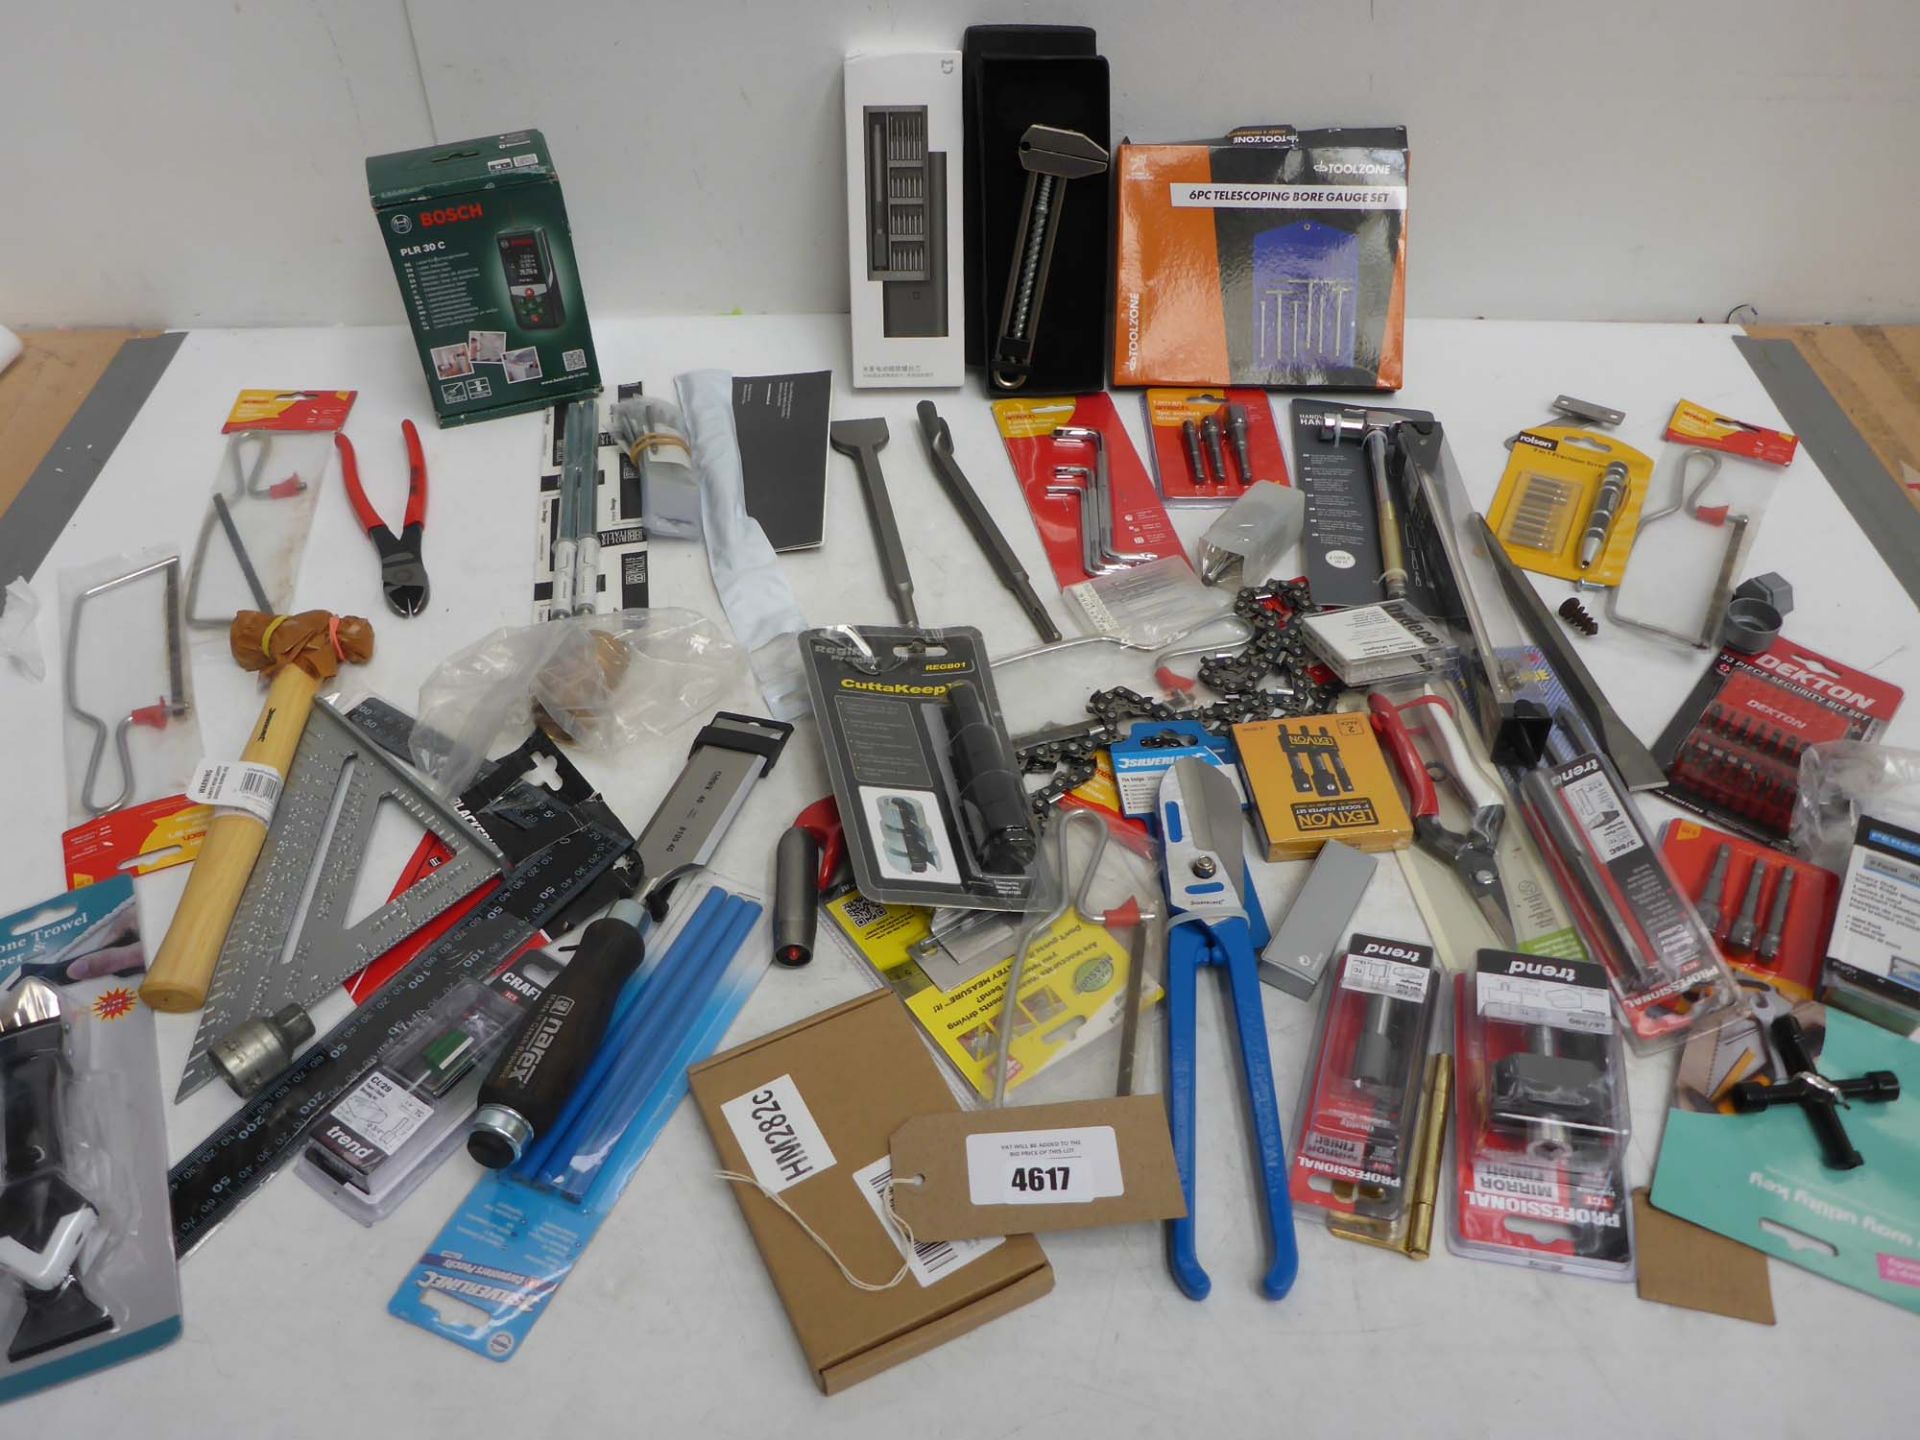 MetMo clamp, Bosch laser level, bore gauge set, hammer, tin snips, hack saws, drill bits, socket